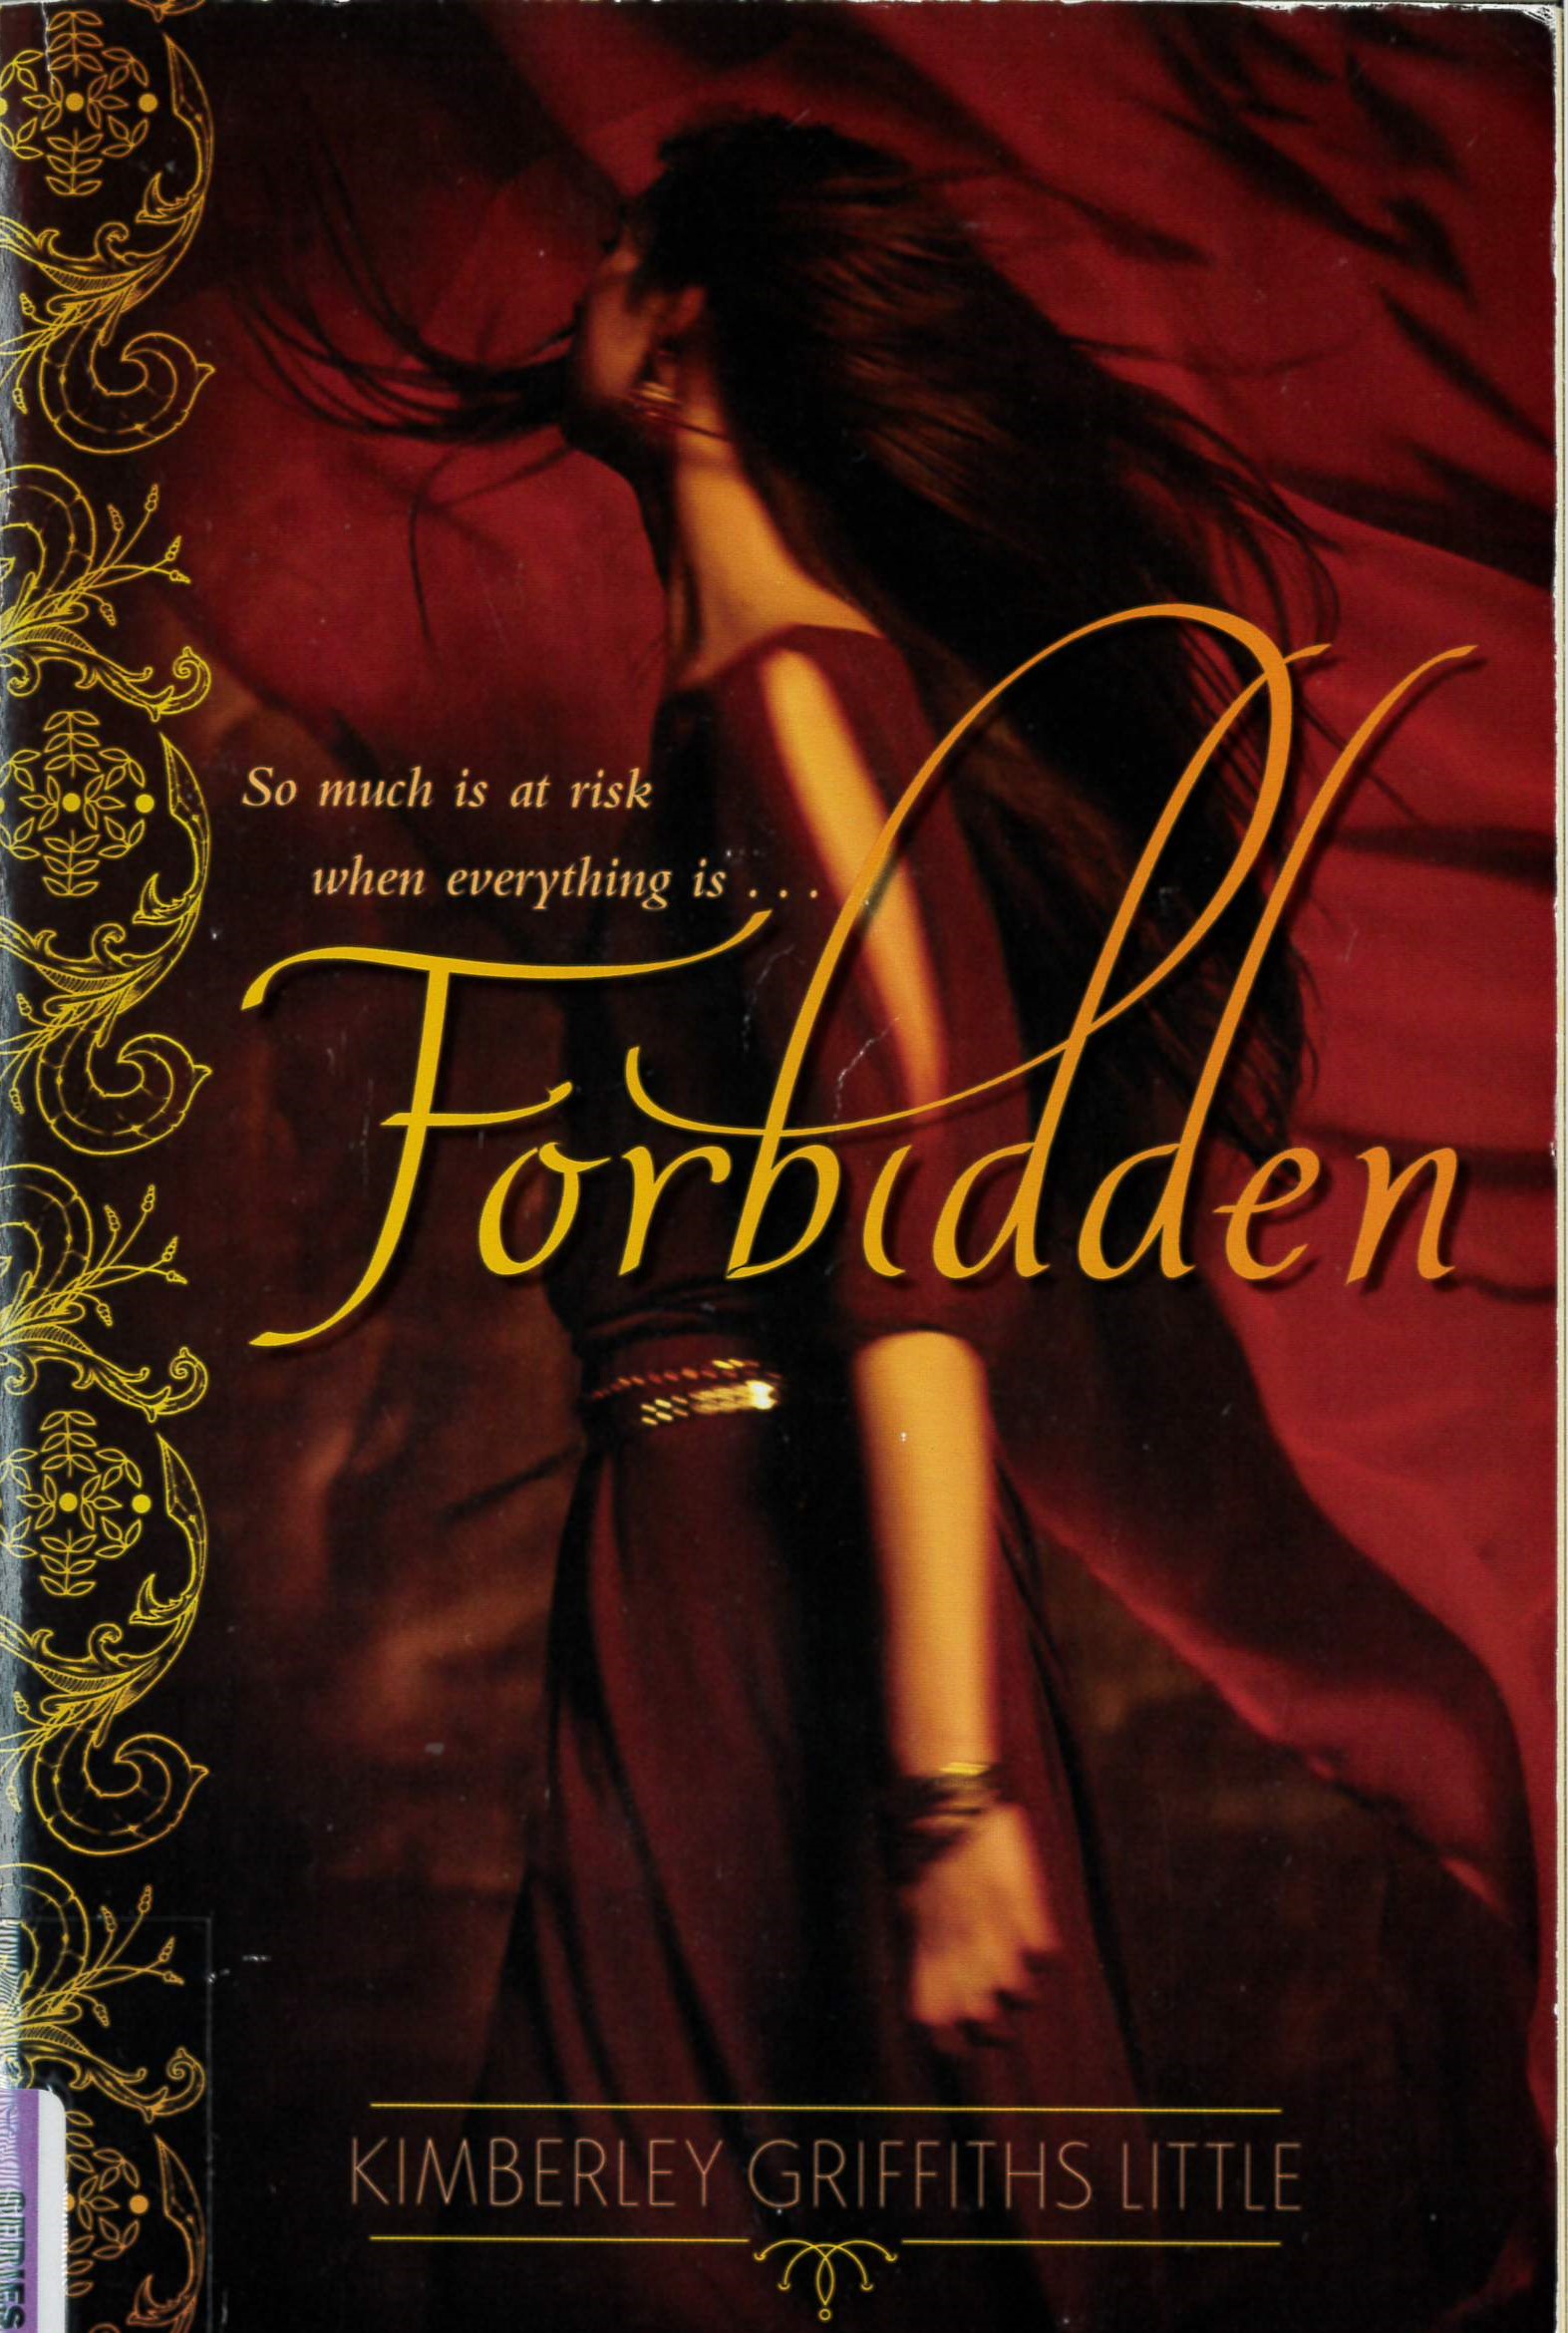 Forbidden /